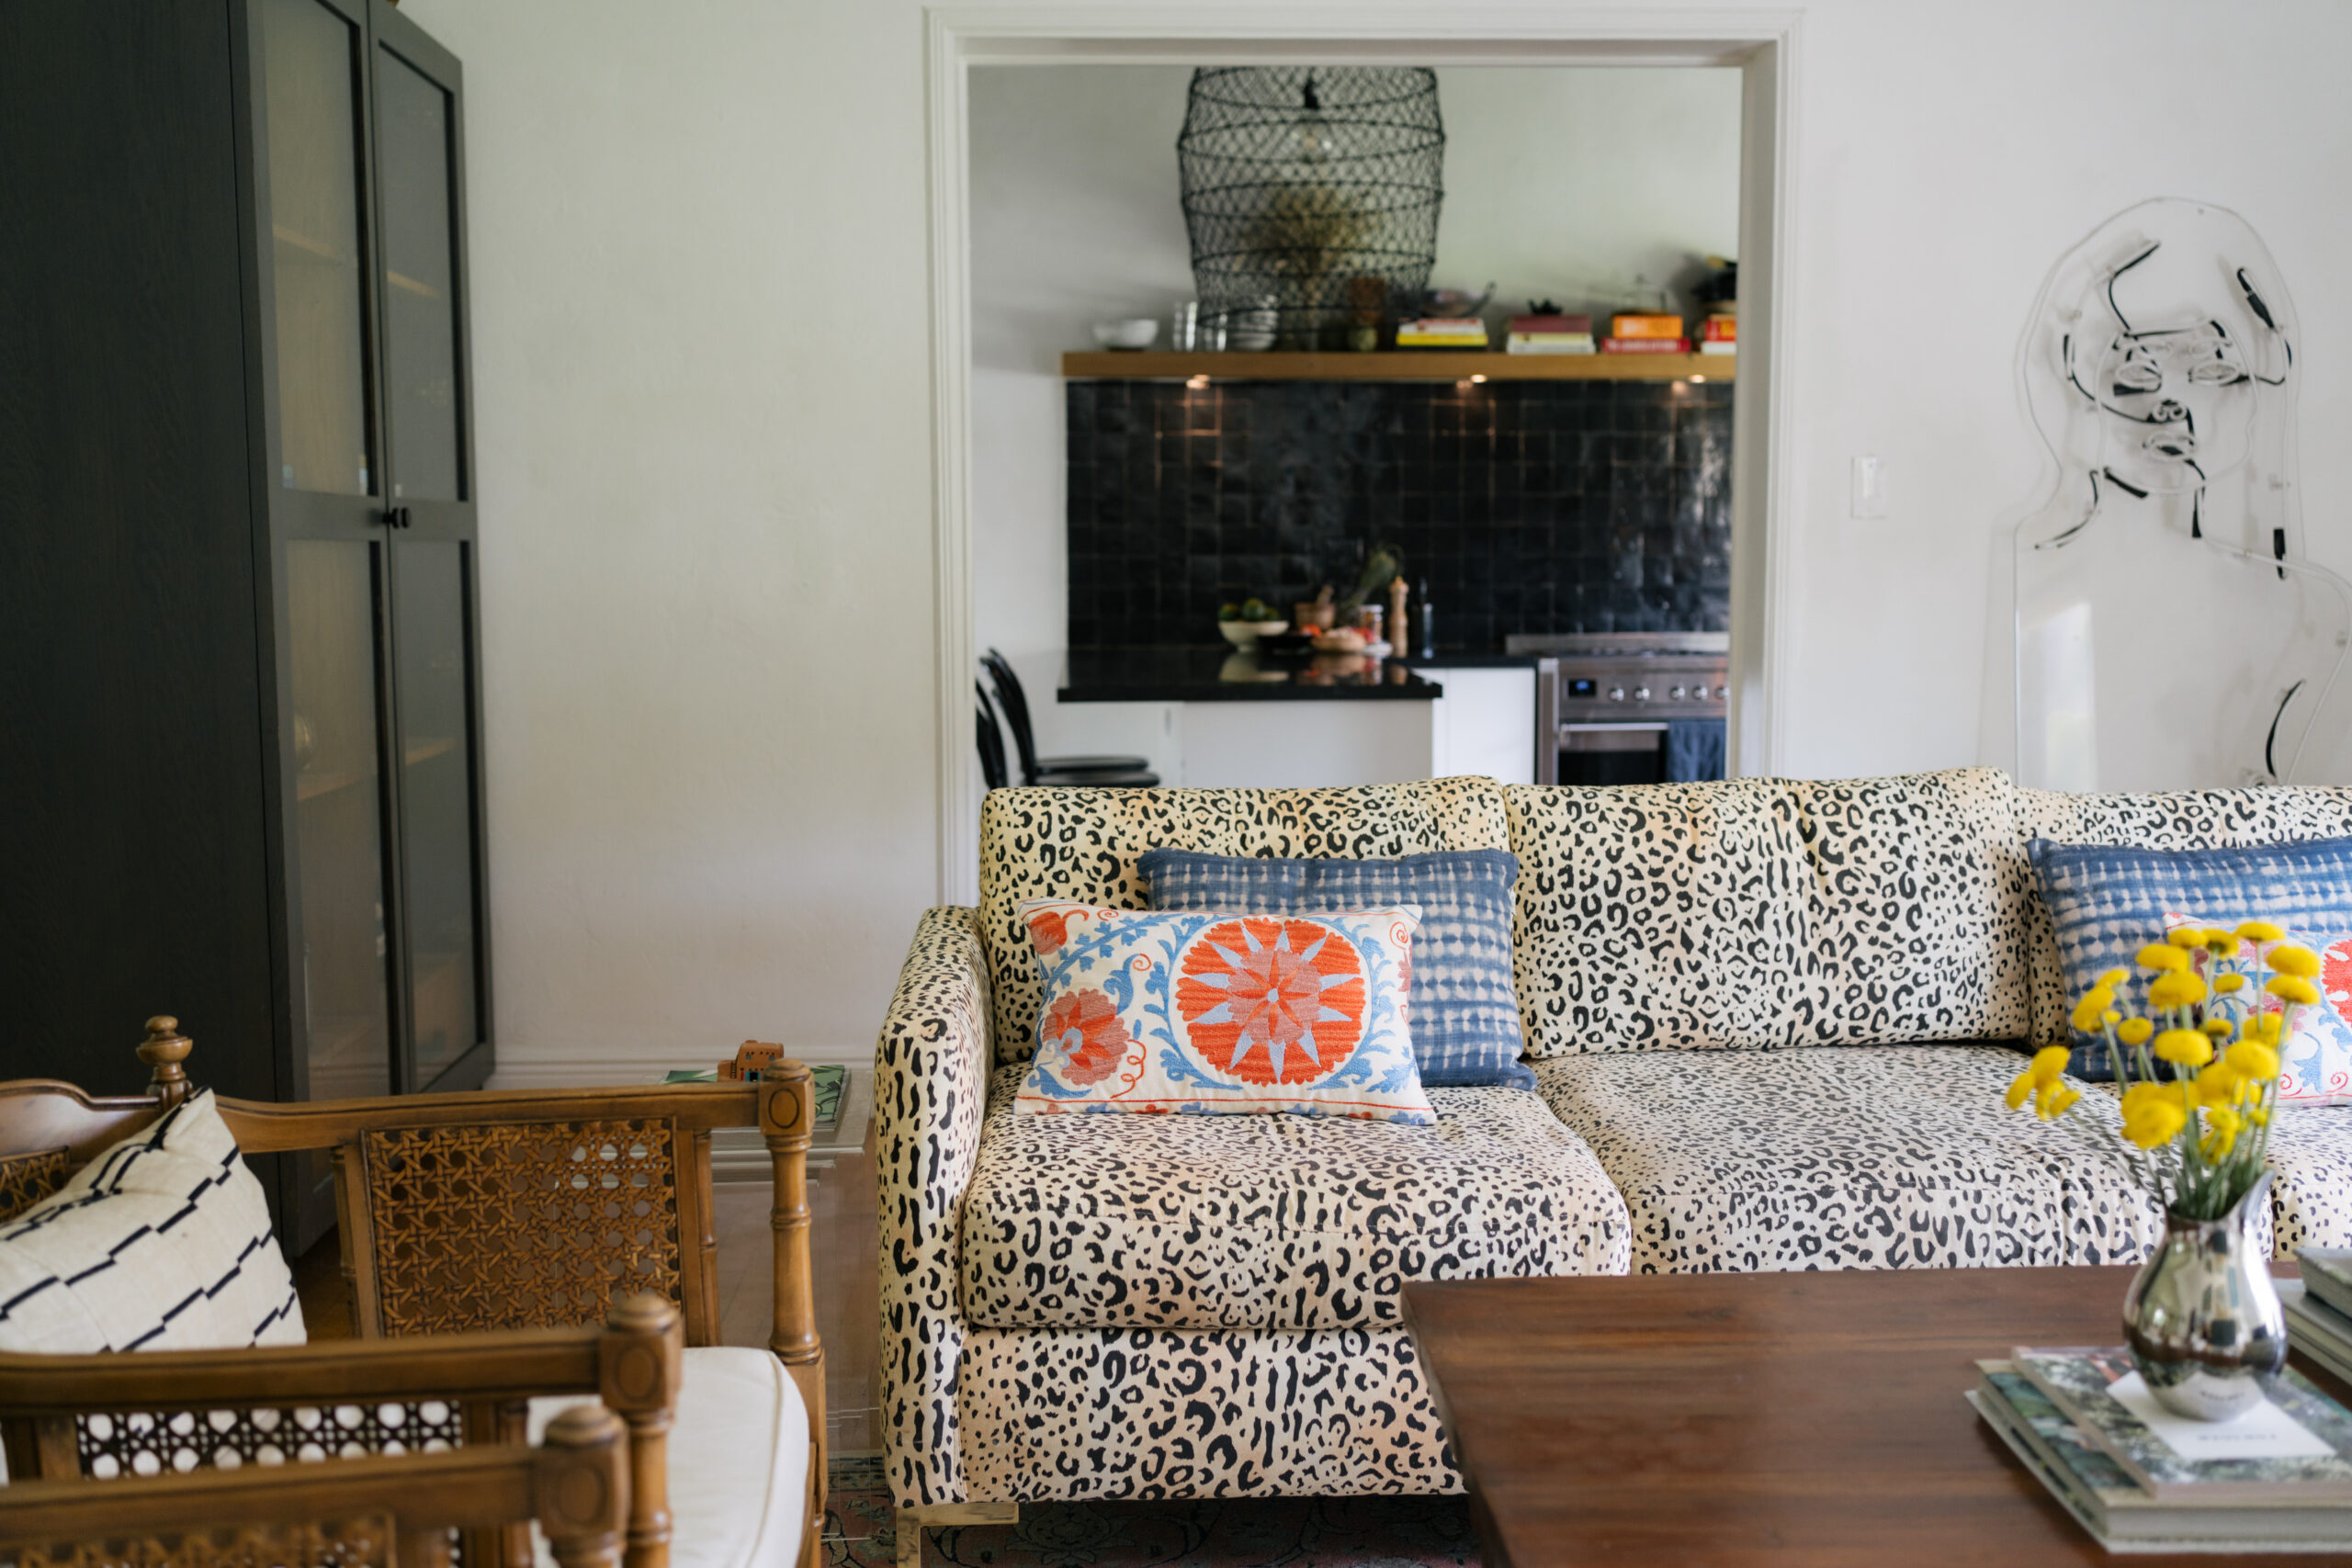 Cheetahs Fabric, Wallpaper and Home Decor